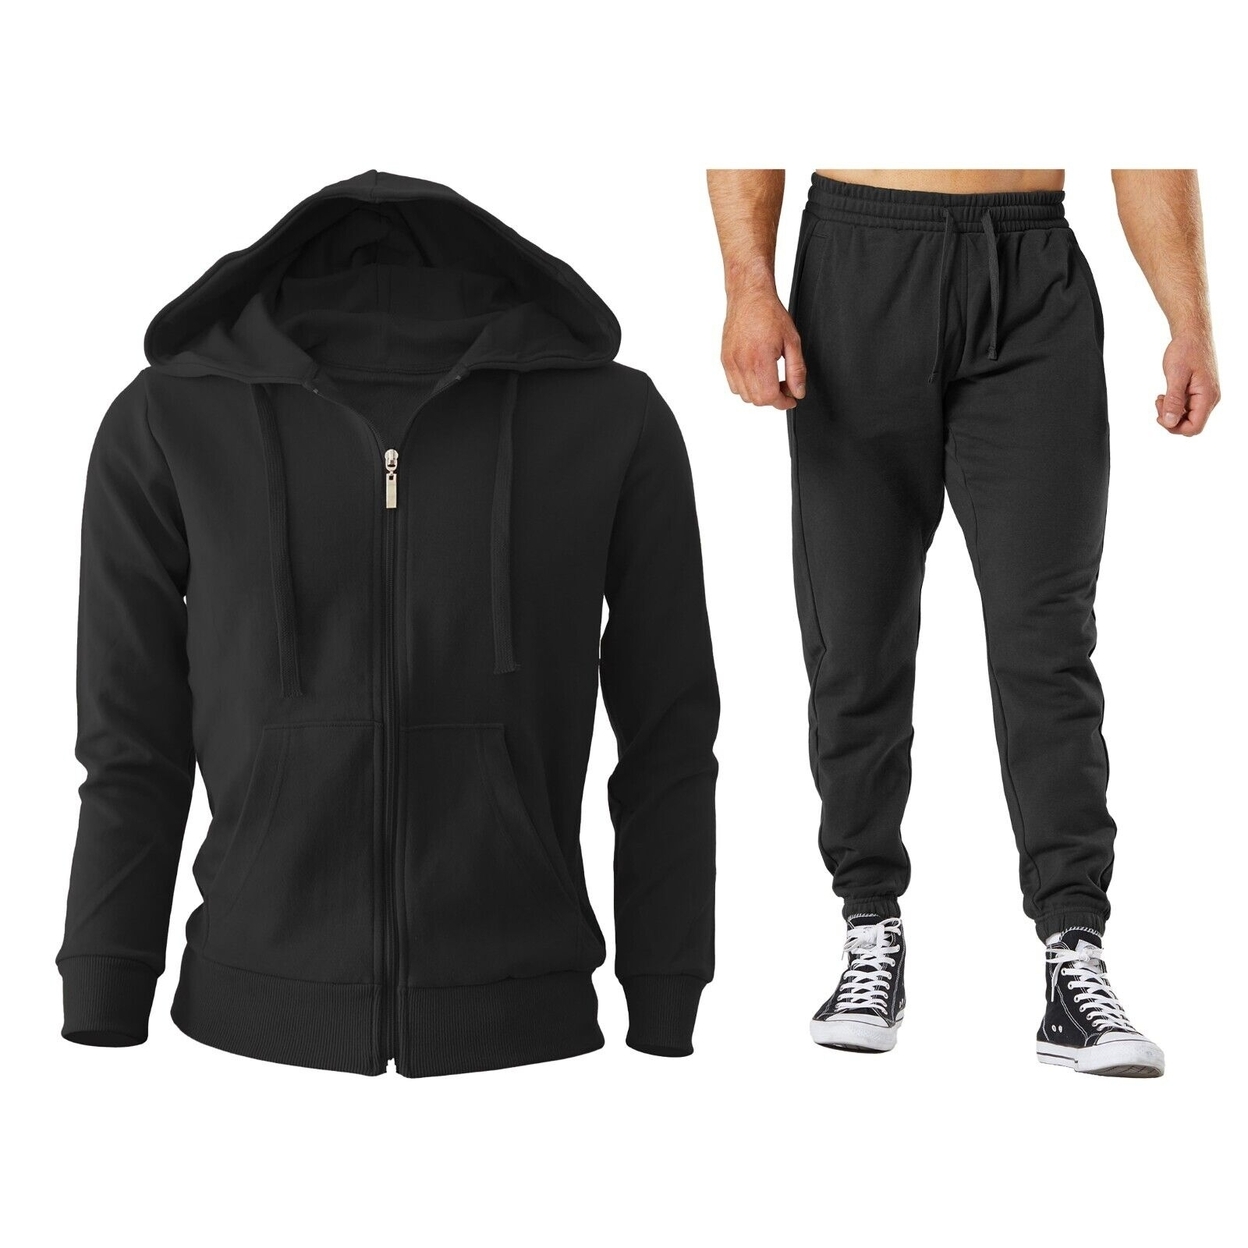 2/4-Piece: Men's Winter Warm Cozy Athletic Multi-Pockets BIG & TALL Sweatsuit Set - Black, 1, Medium